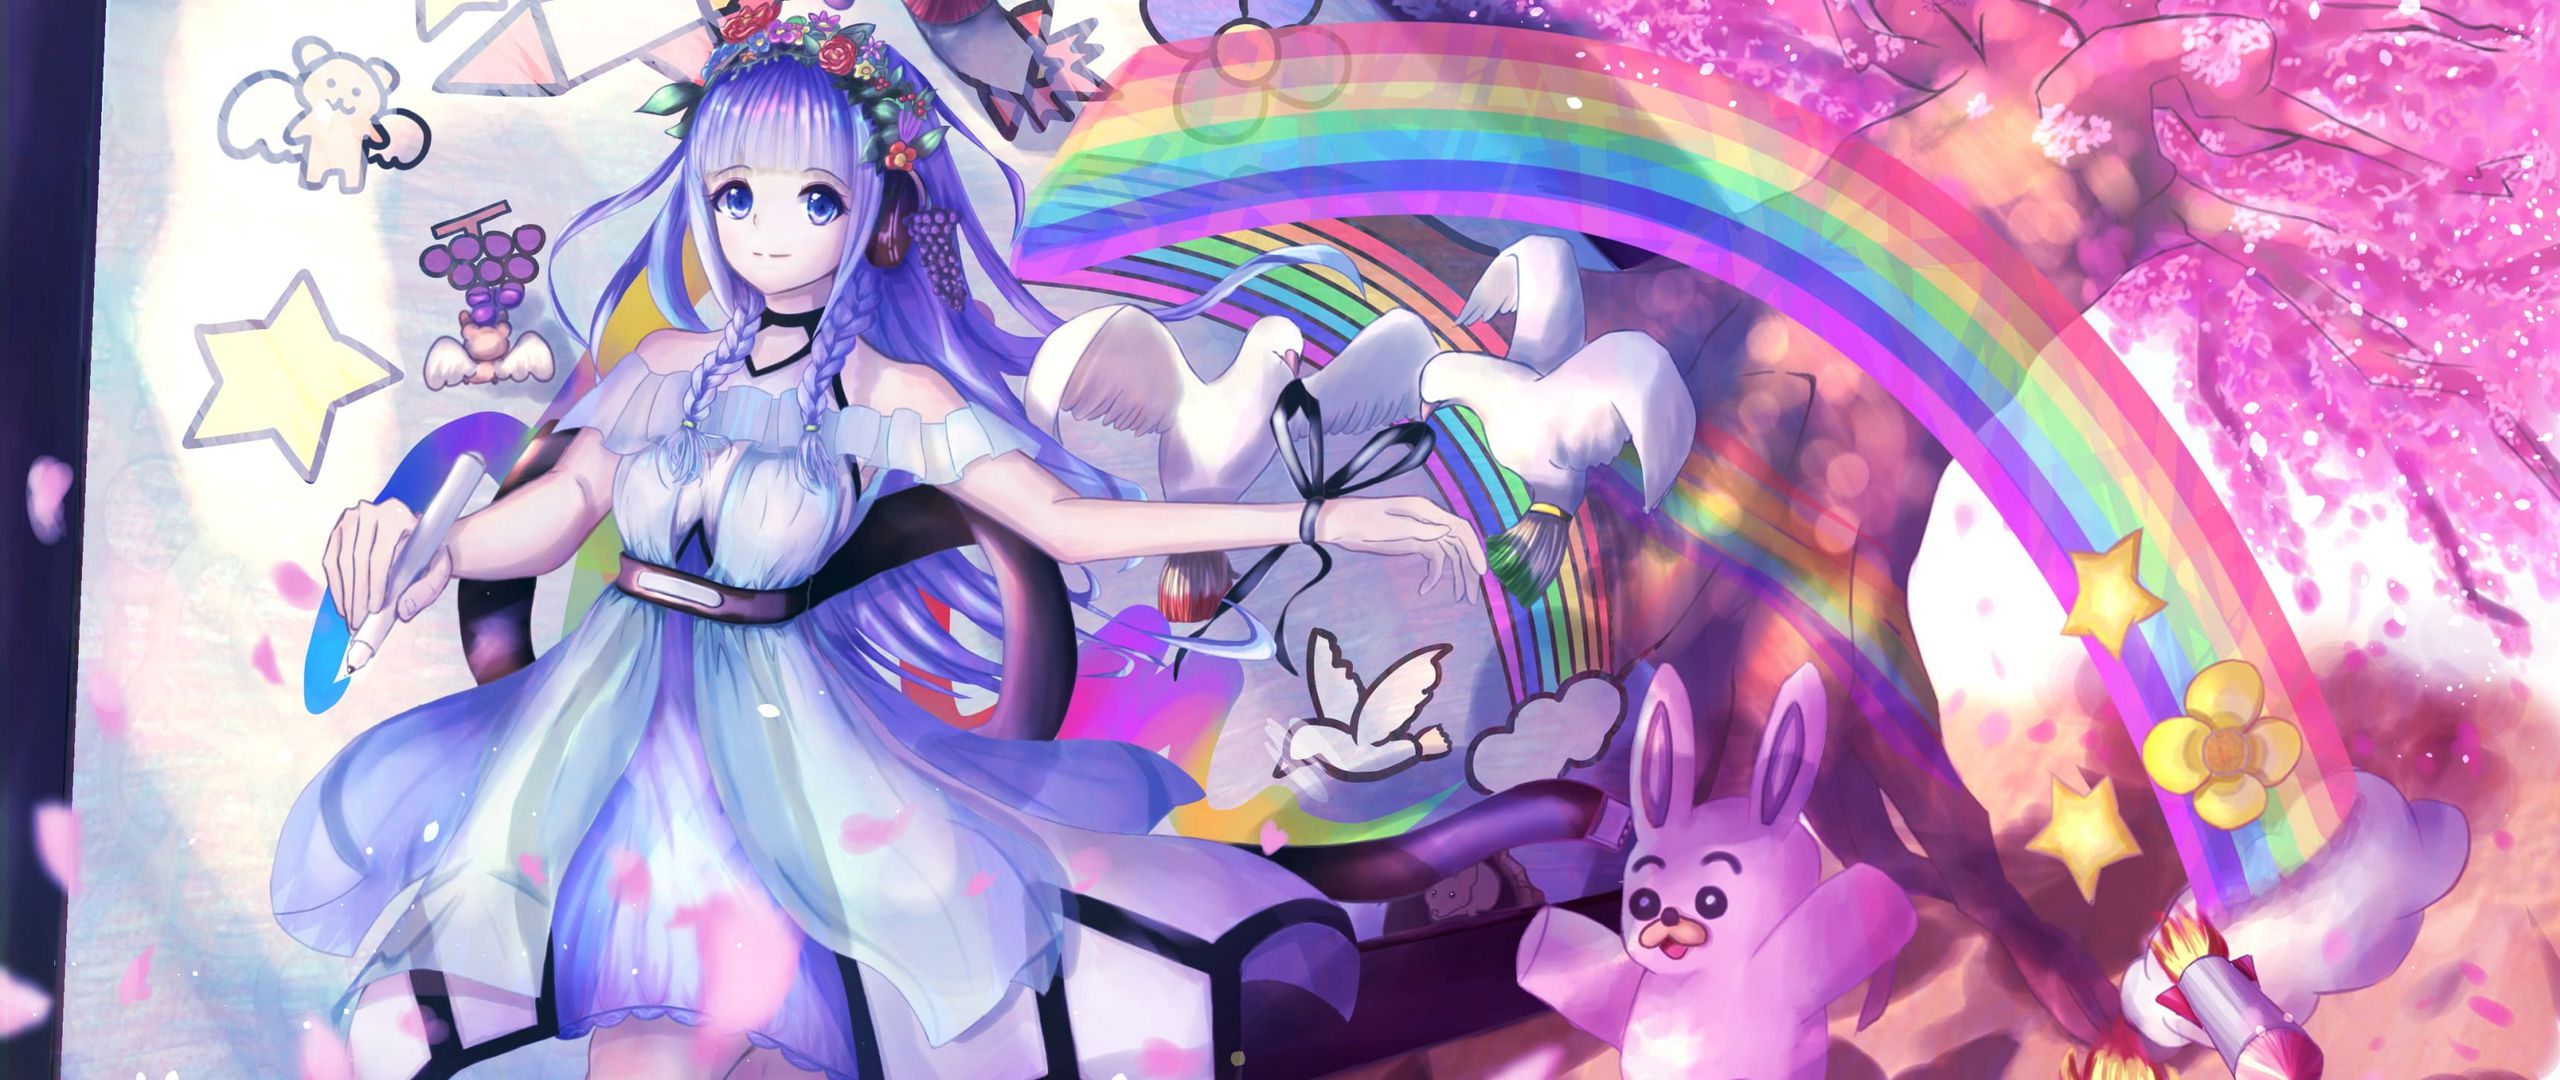 Download wallpaper 2560x1080 girl, rainbow, imagination, anime, art dual wide 1080p HD background